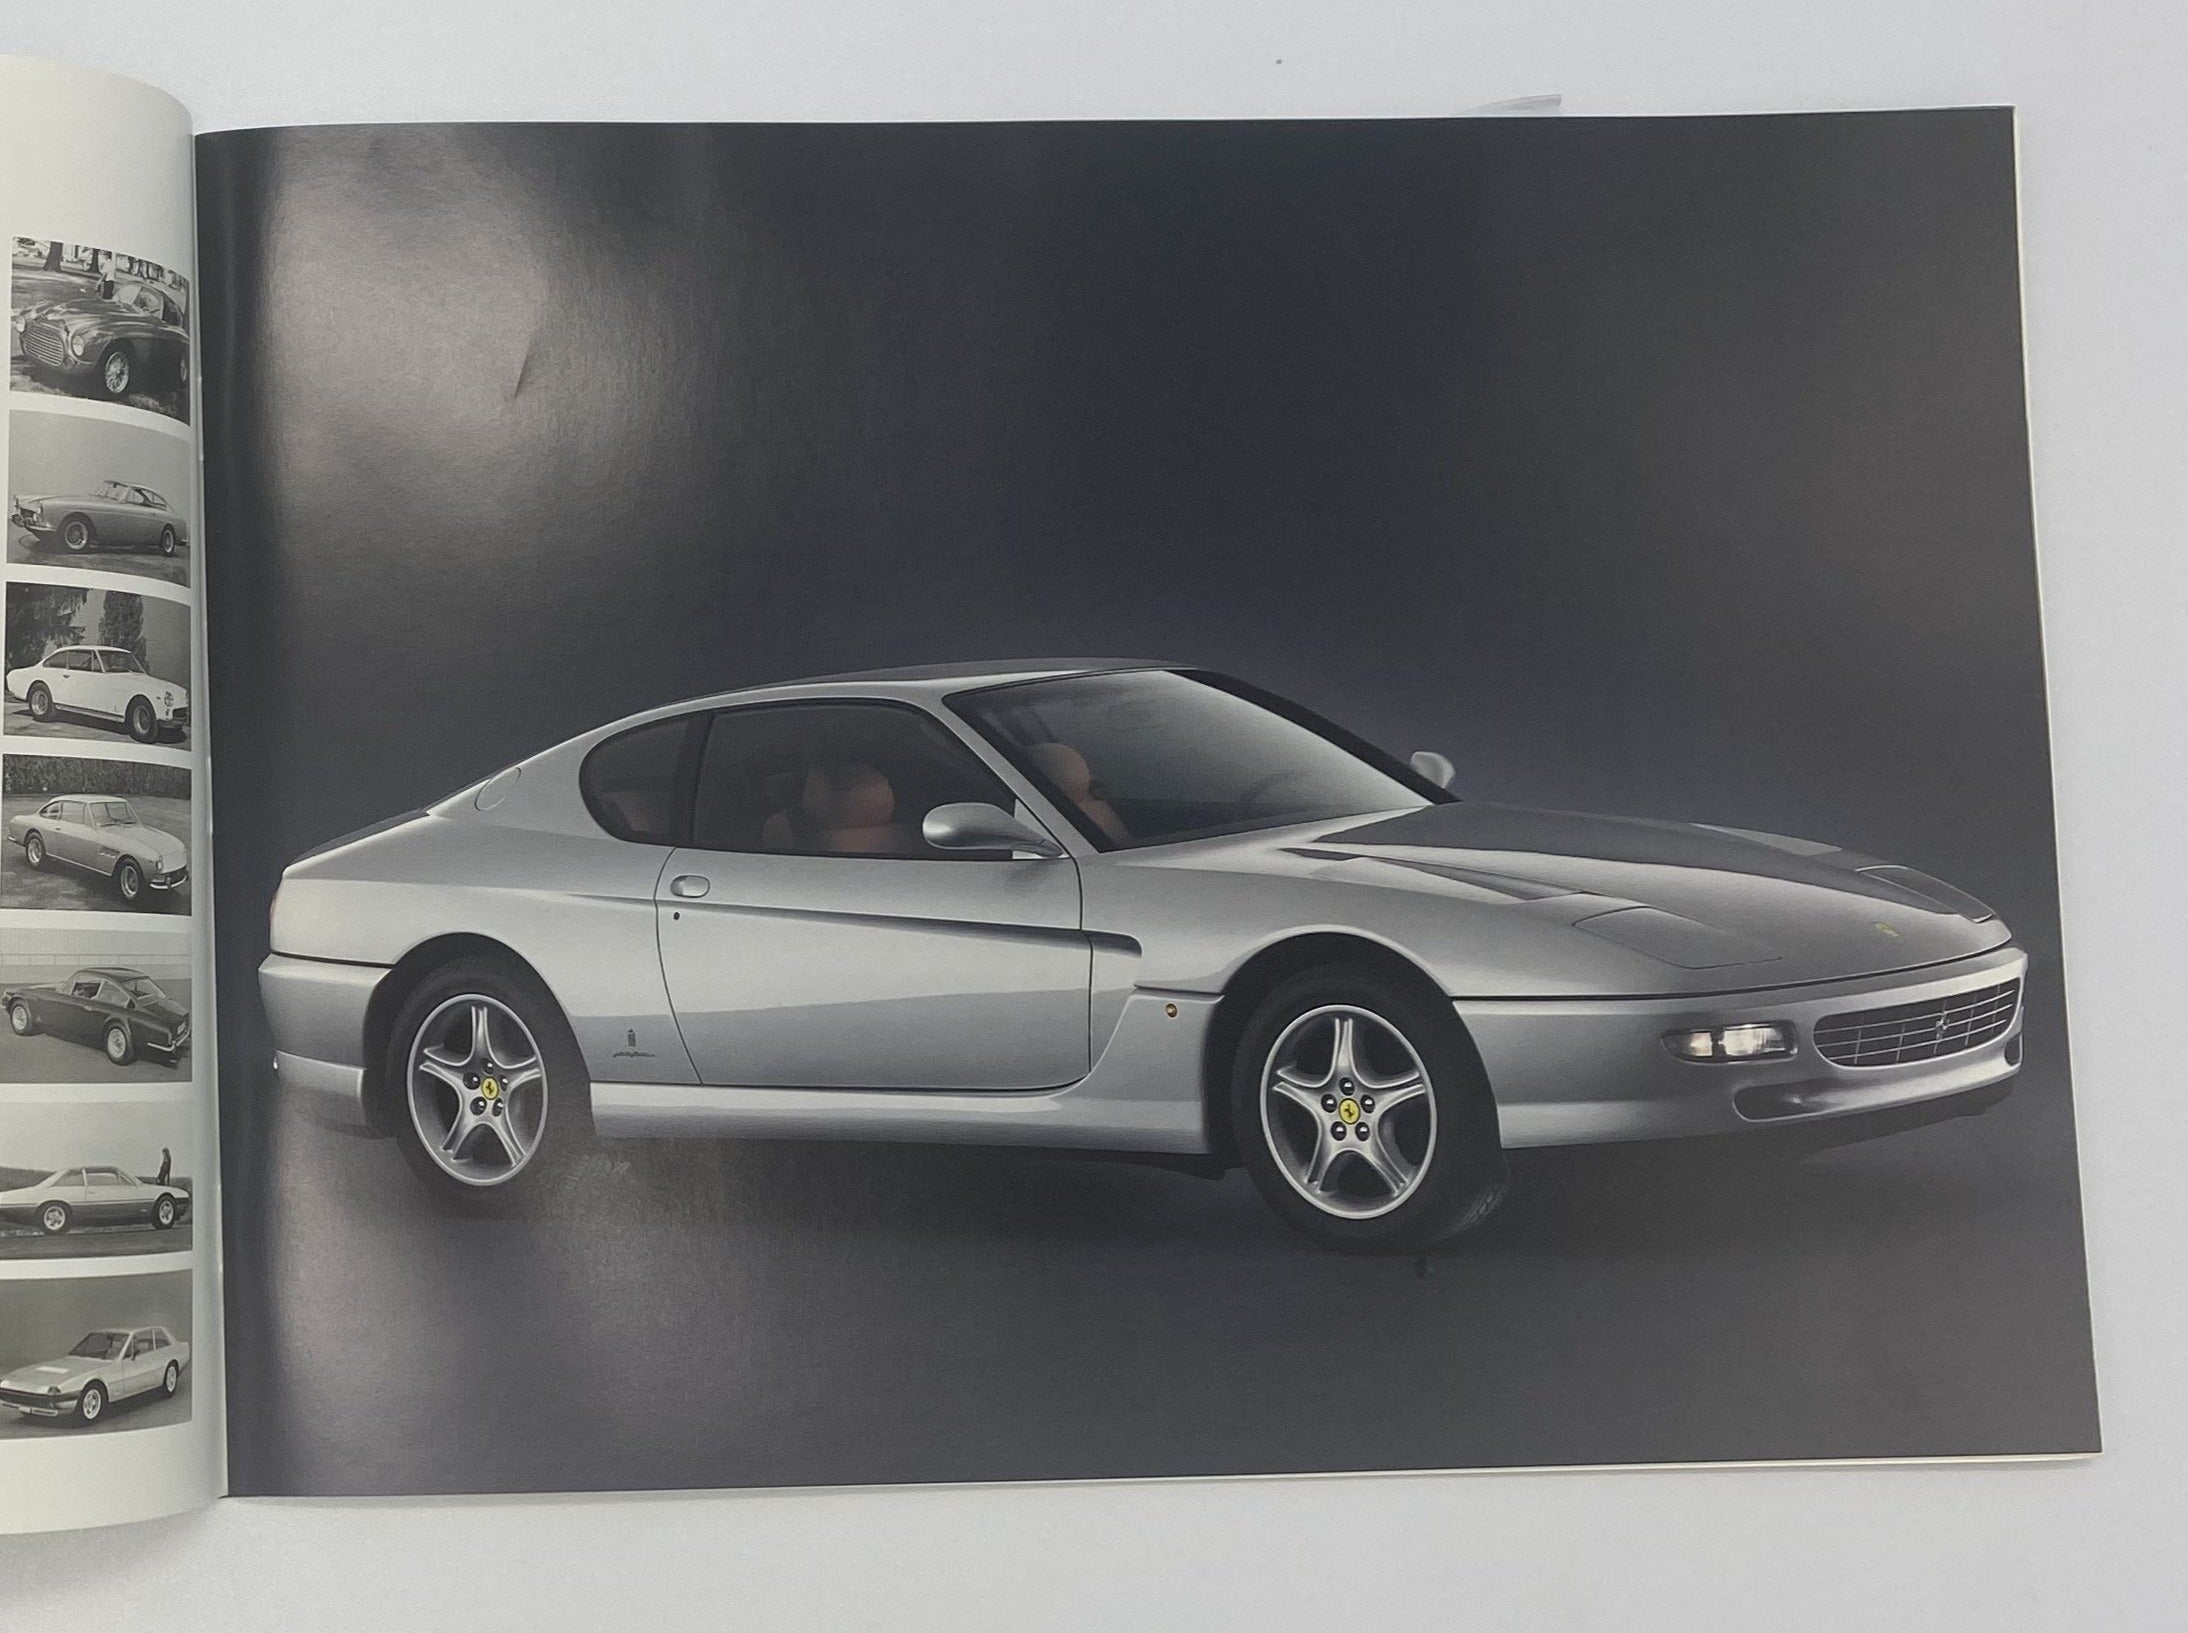 Ferrari 456 GTA Press Kit, Includes 10 Slides - 1087/96